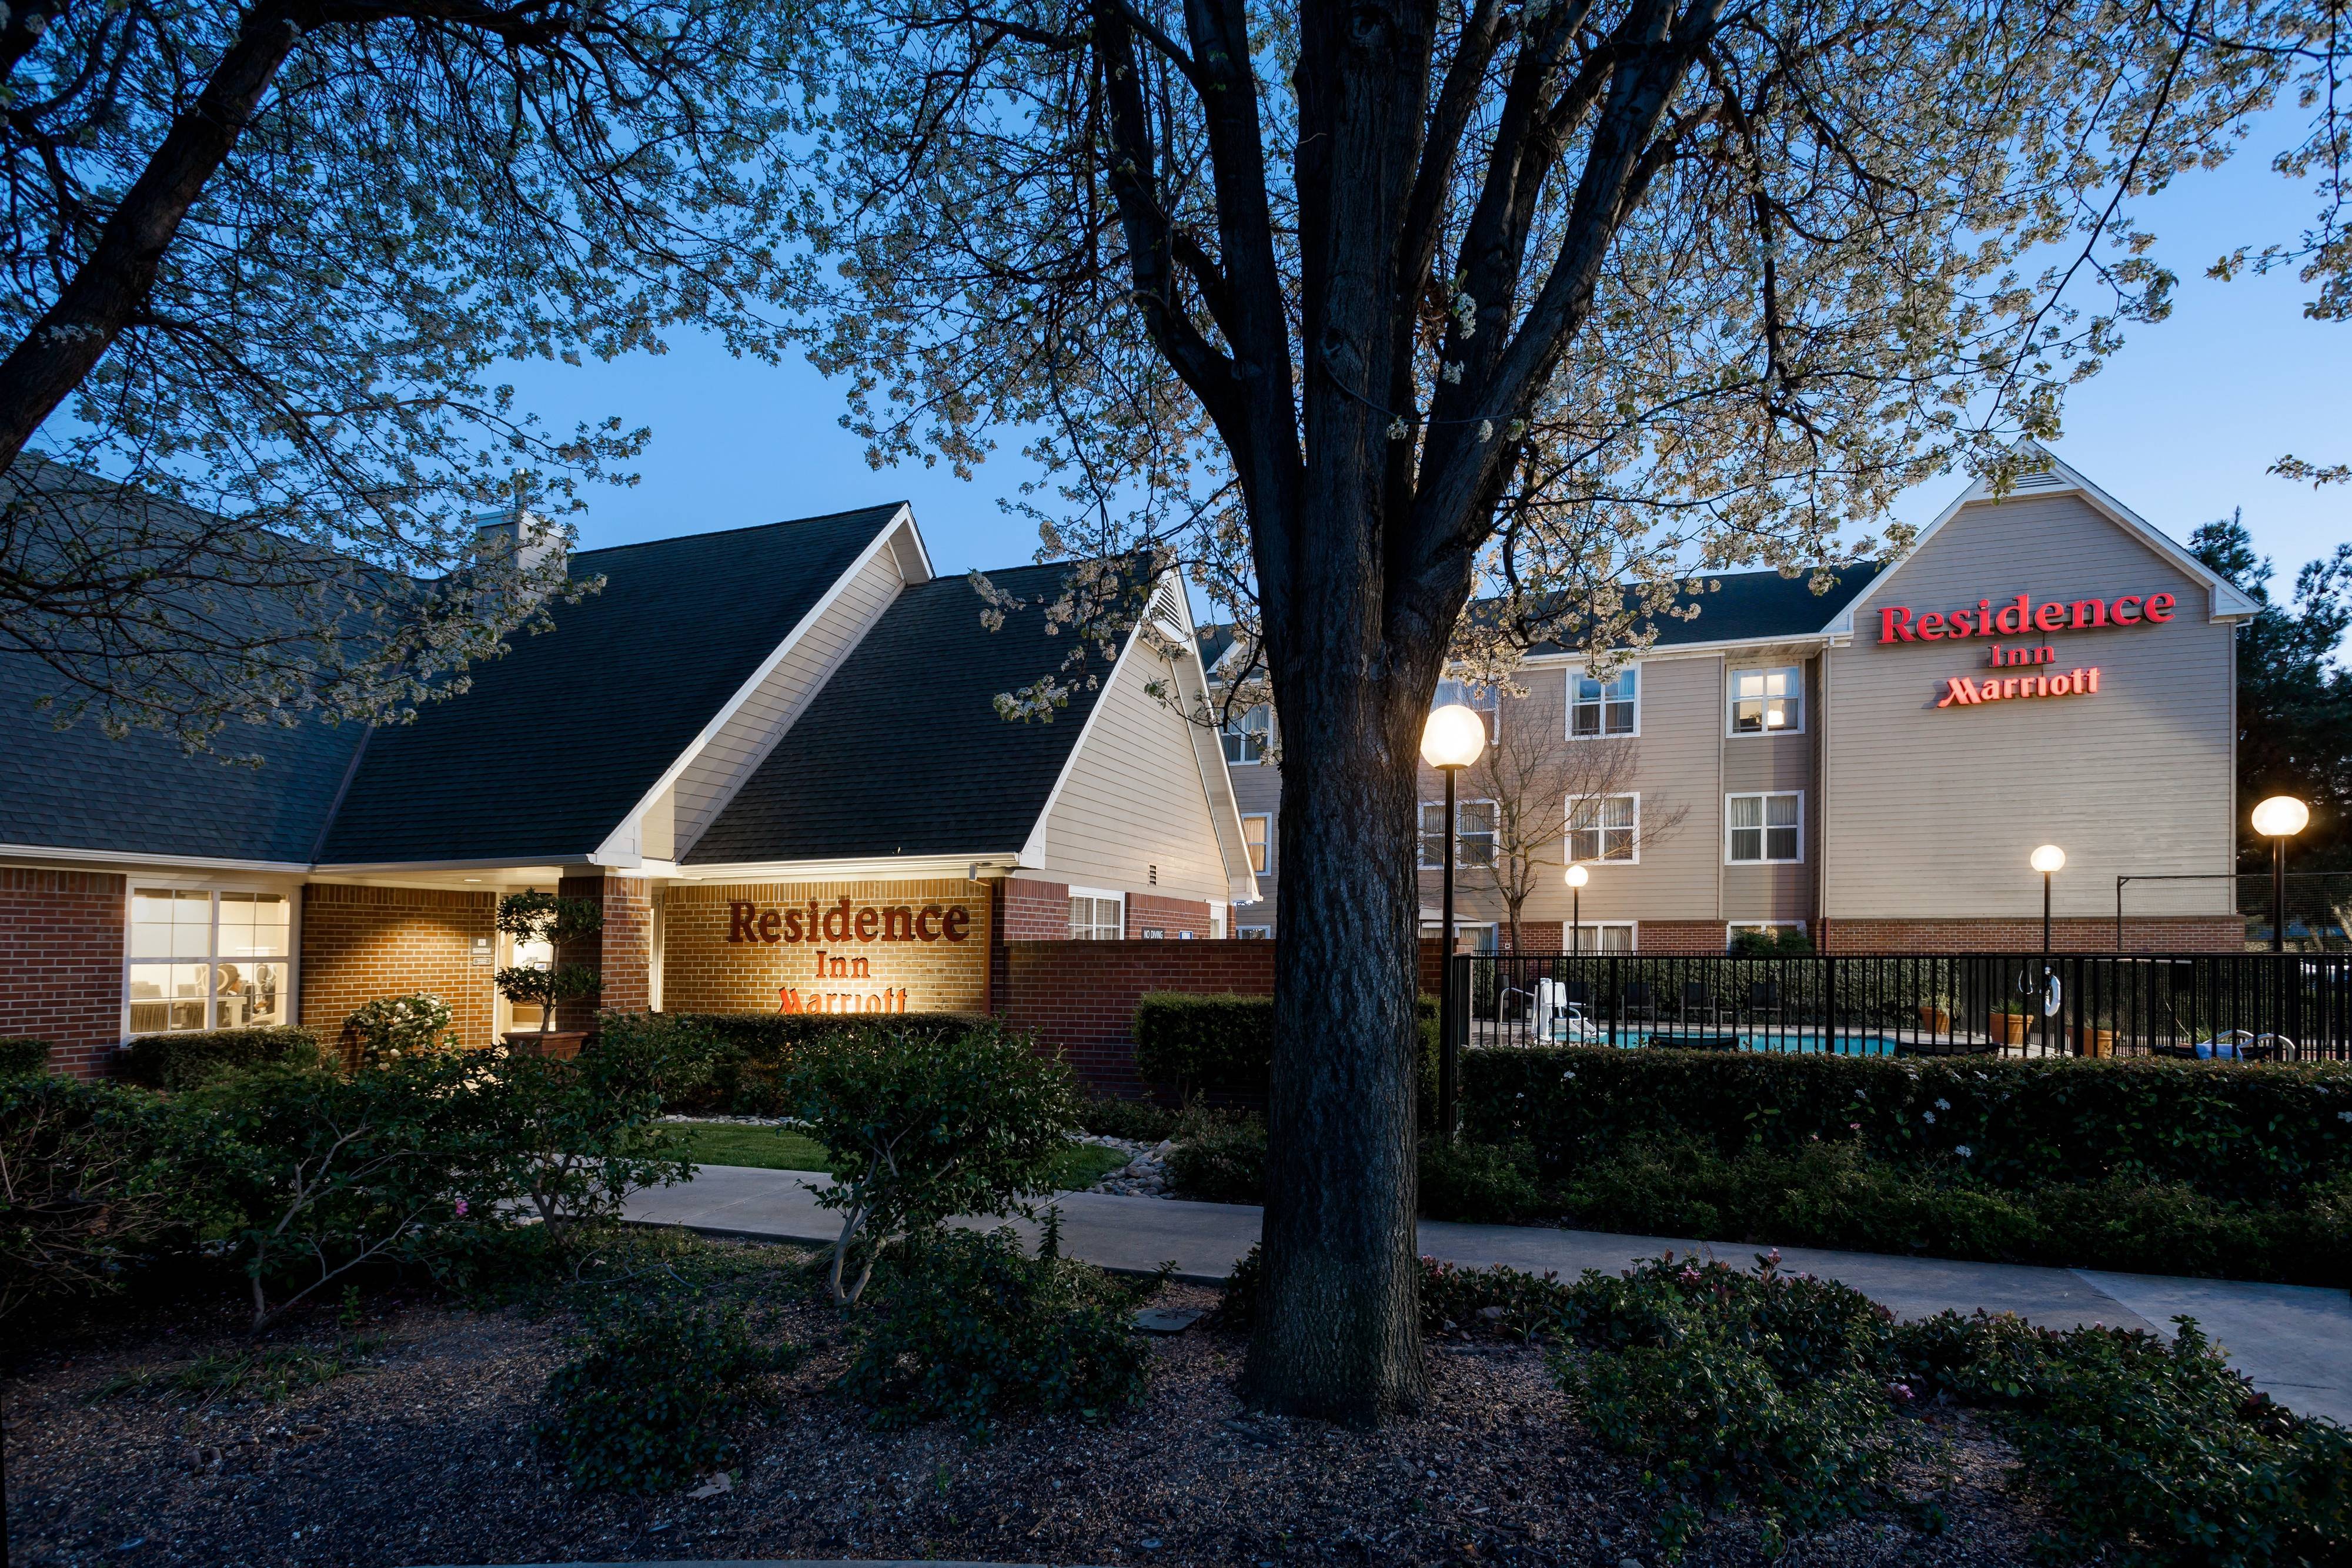 Photo of Residence Inn by Marriott Stockton, Stockton, CA